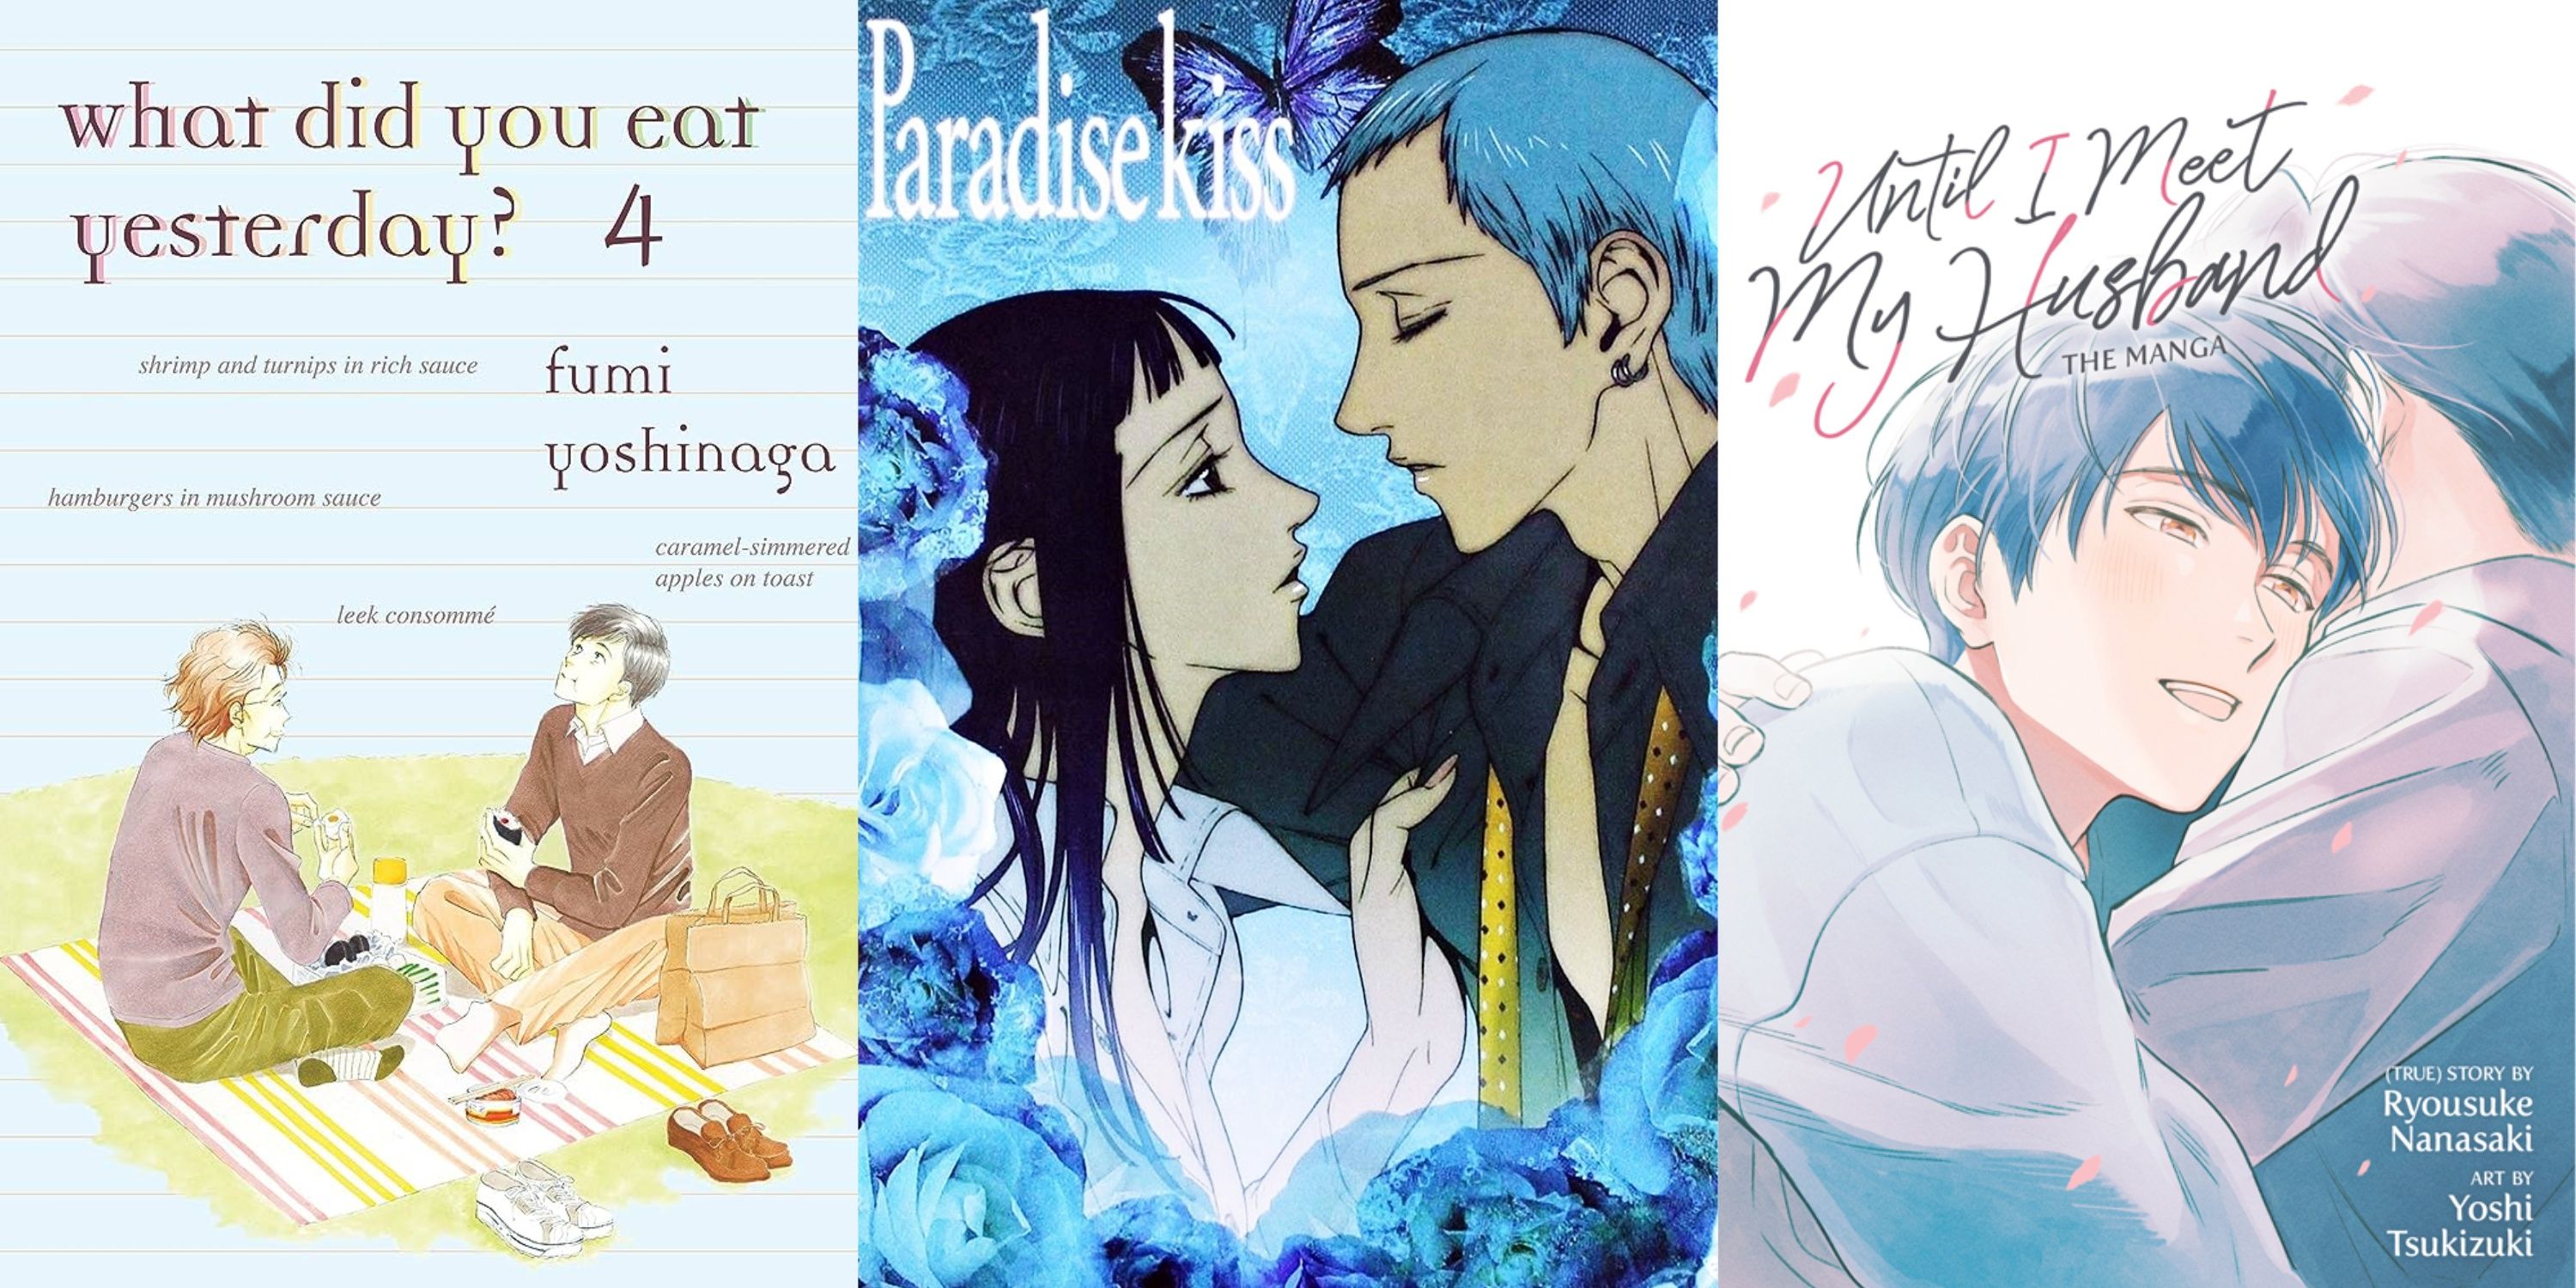 Split Image What Did You Eat Yesterday manga, Paradise Kiss anime, and Until I Meet My Husband manga